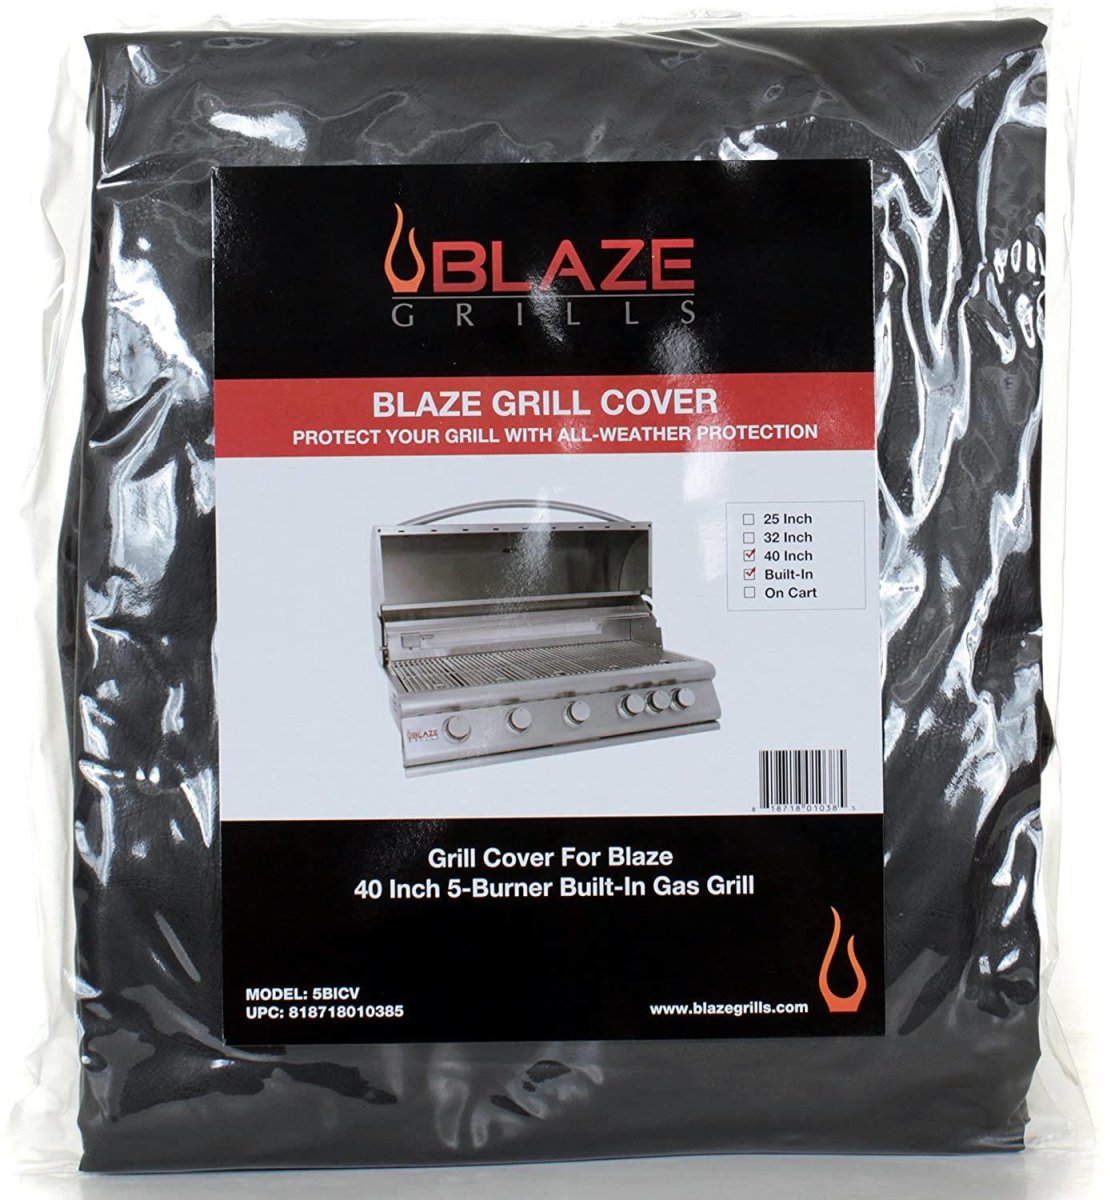 Blaze Grill Cover For Premium LTE 5-Burner Built-In Gas Grills 5BICV - Texas Star Grill Shop 5BICV